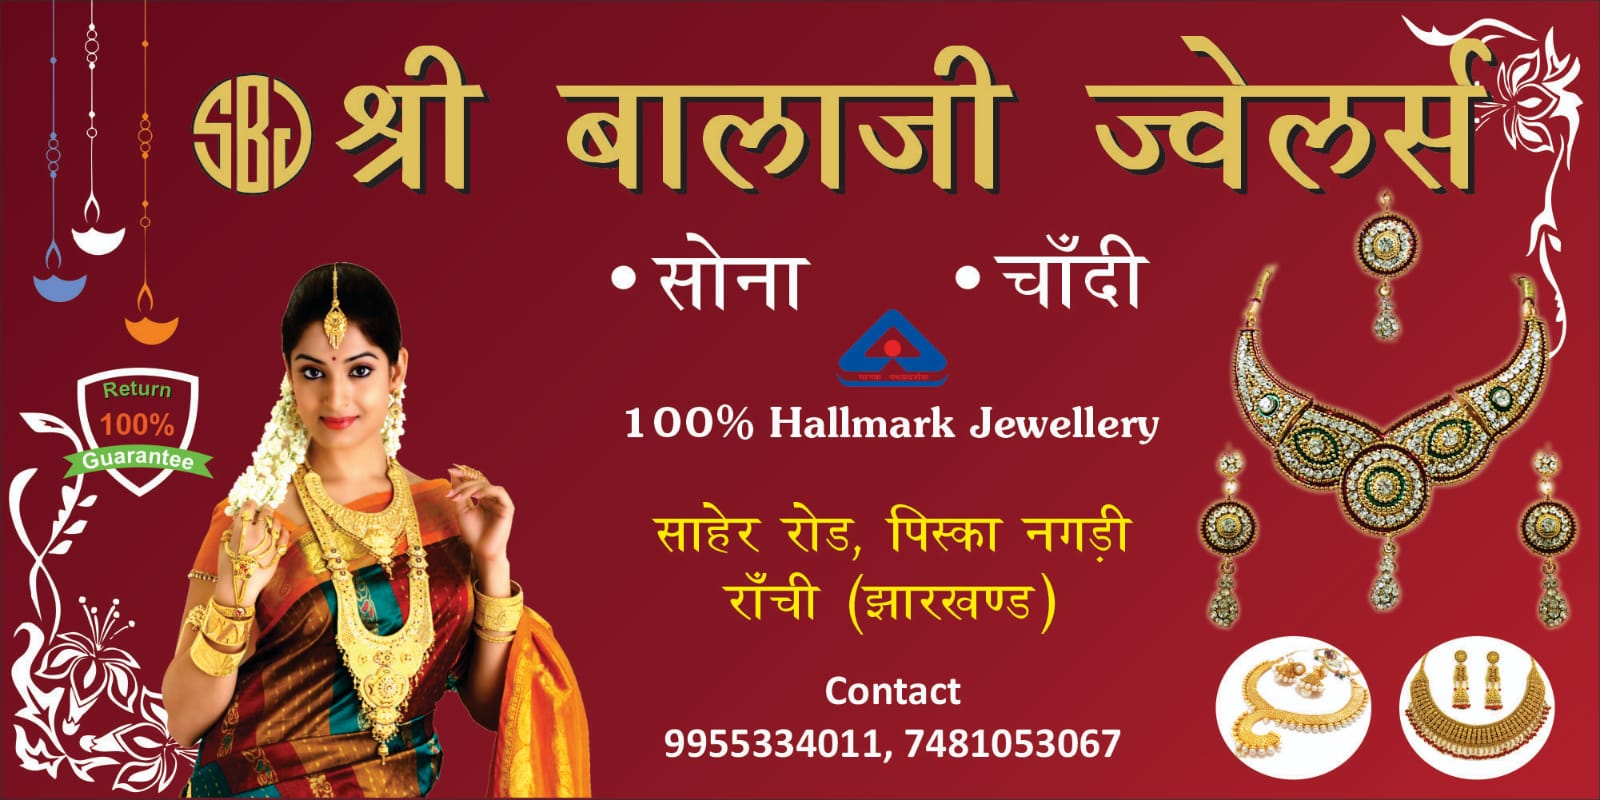 Jewellery shop near ratu chatti in Ranchi